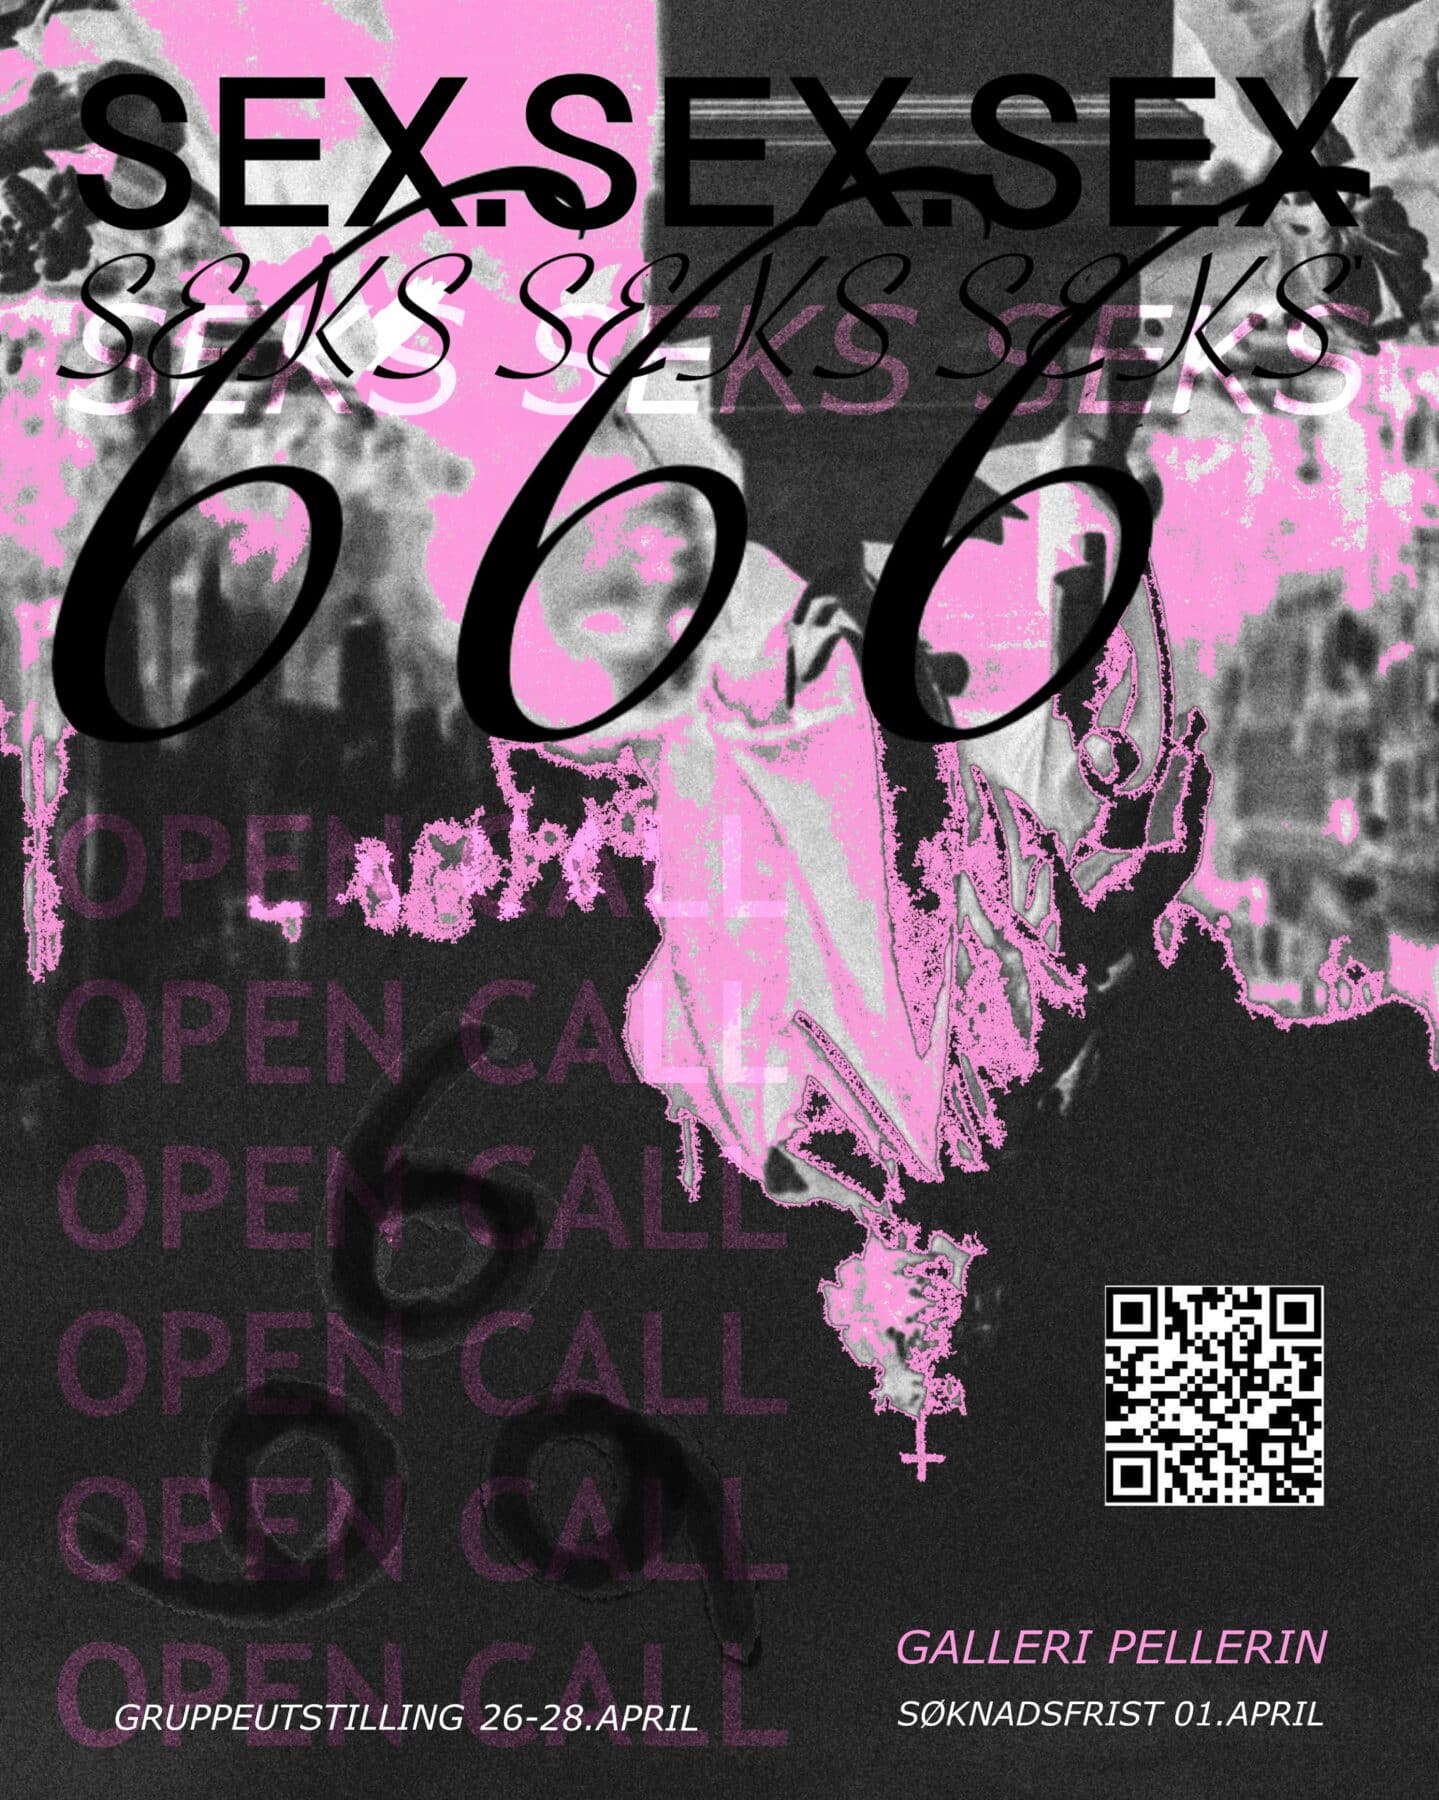 Open call: "666"